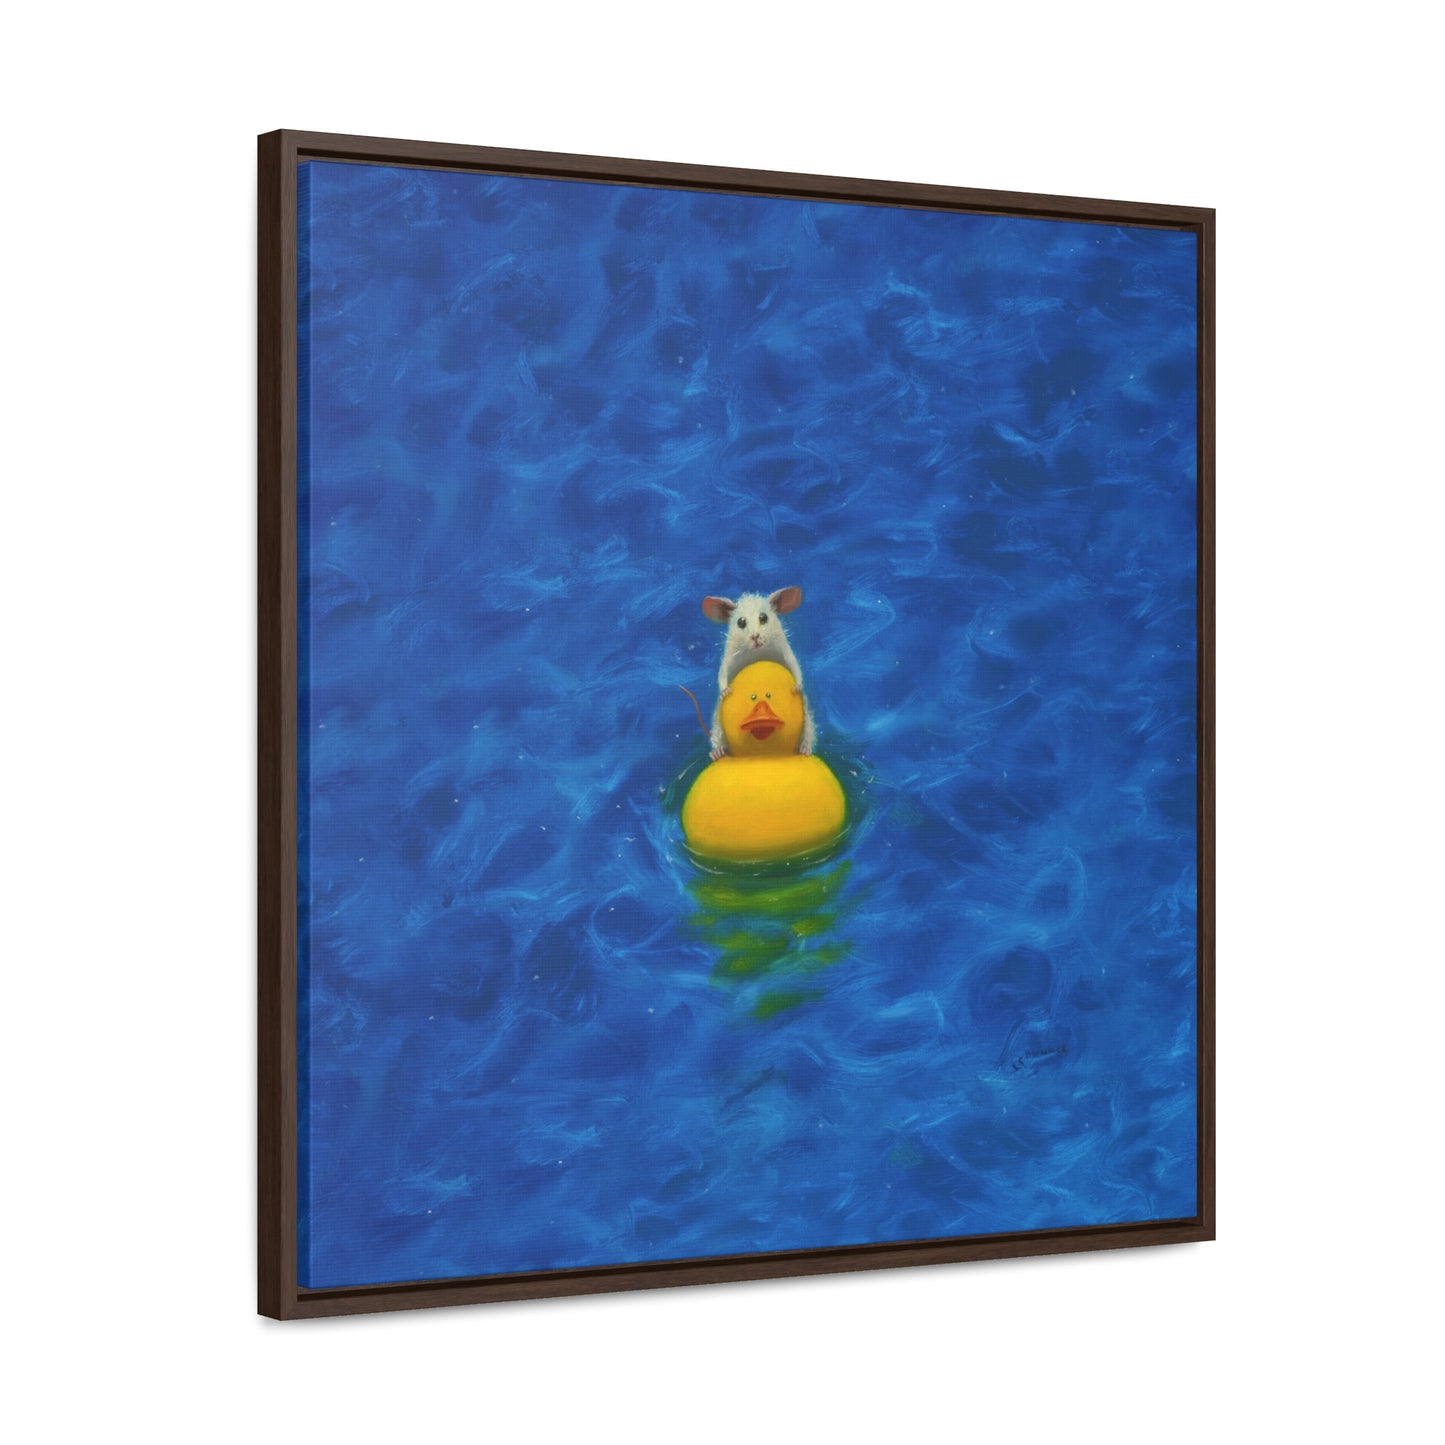 Stuart Dunkel: "Pool Fun" - Framed Canvas reproduction